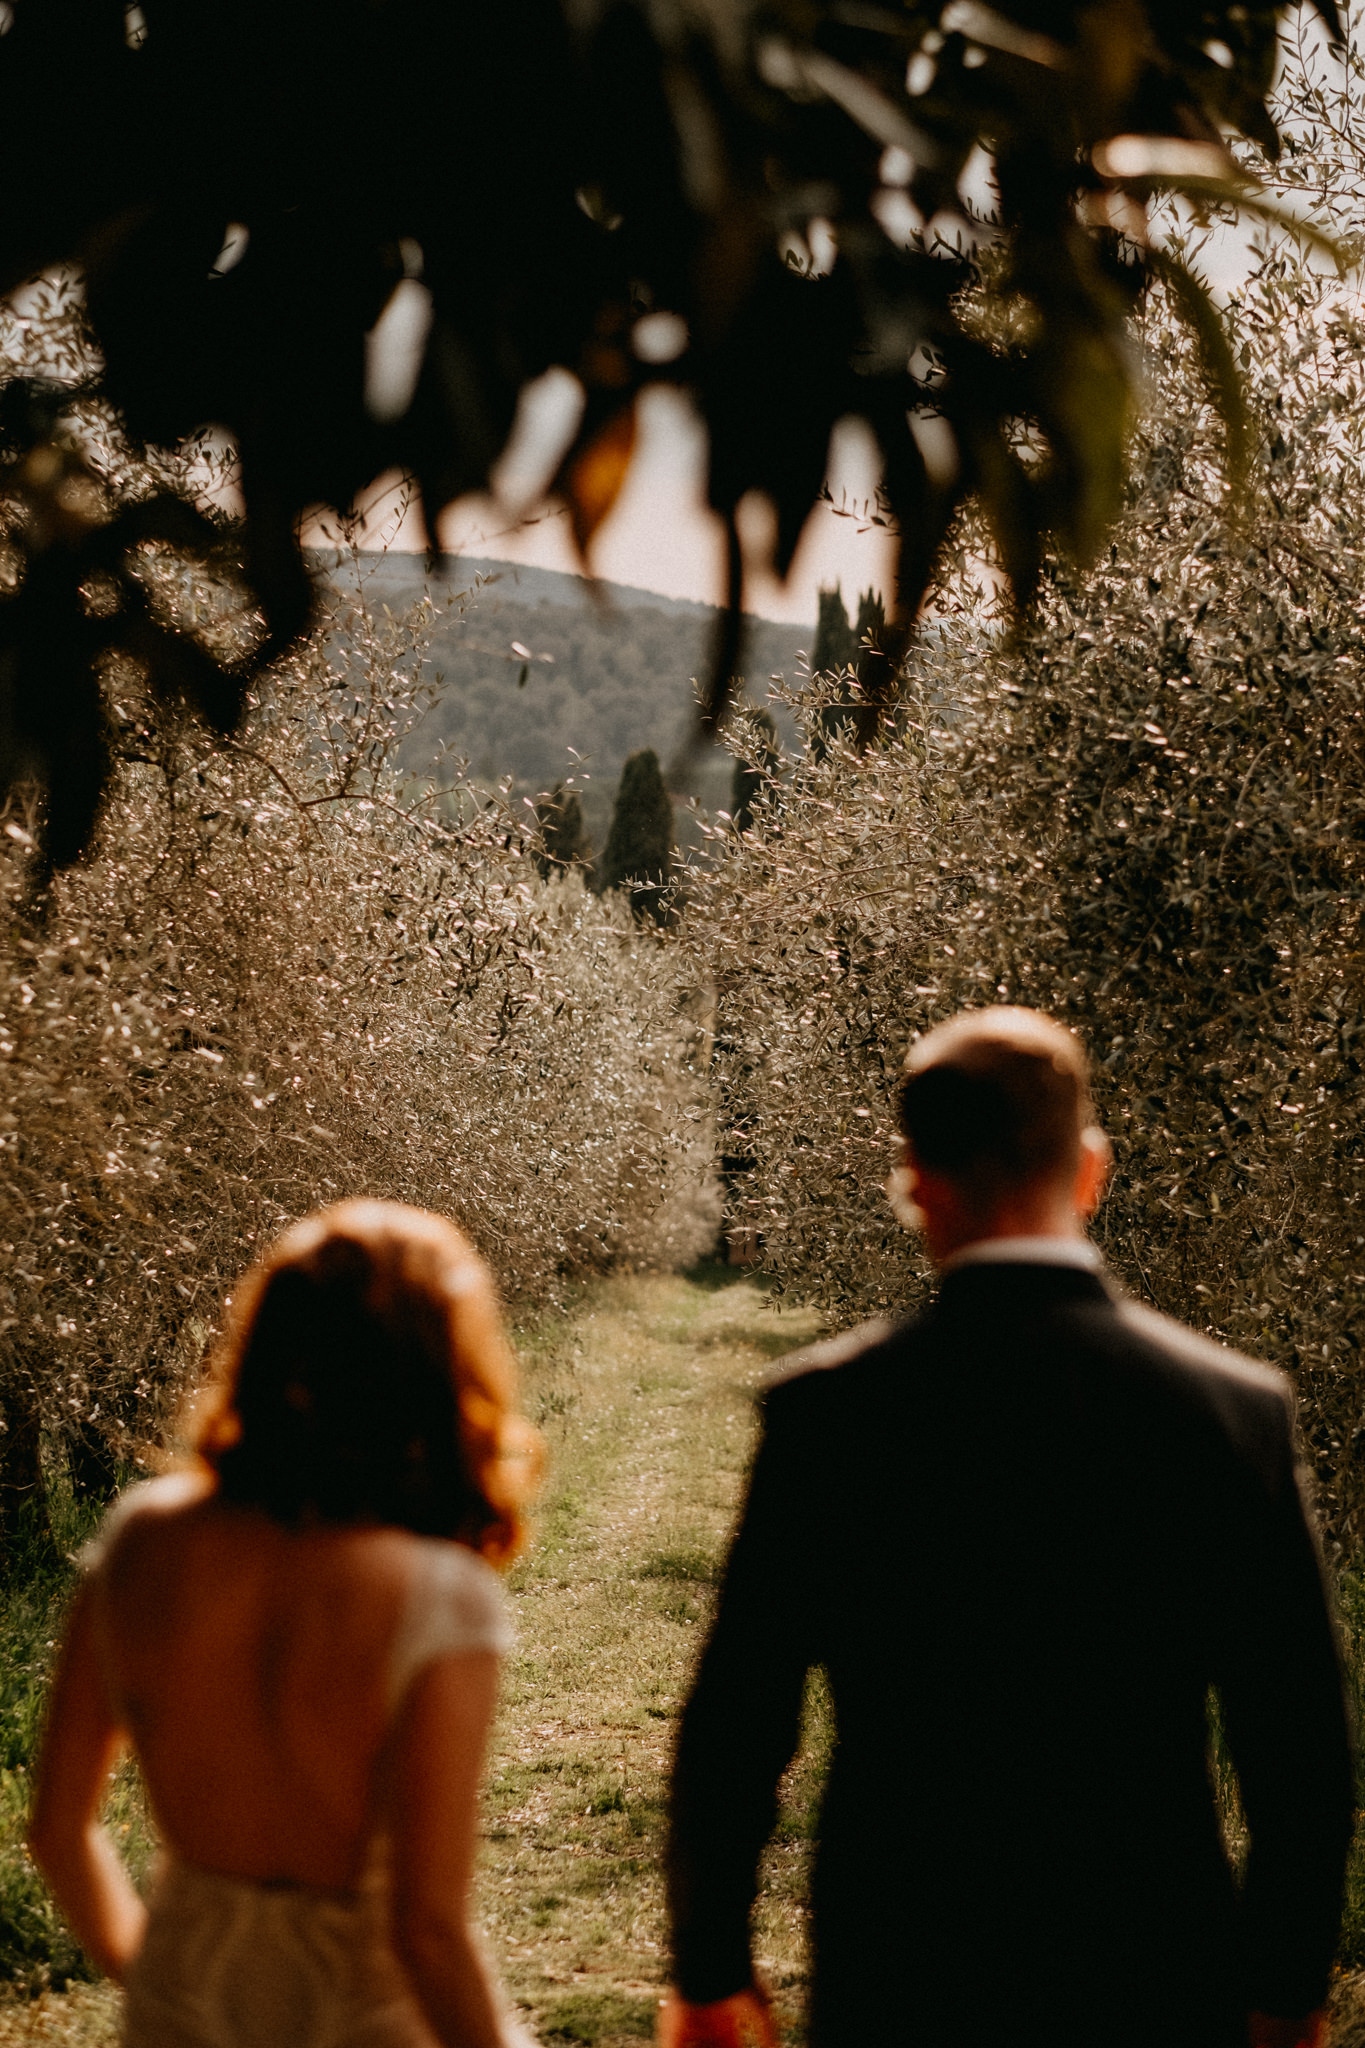 Wedding at Borgo Stomennano, Tuscany - Portraits